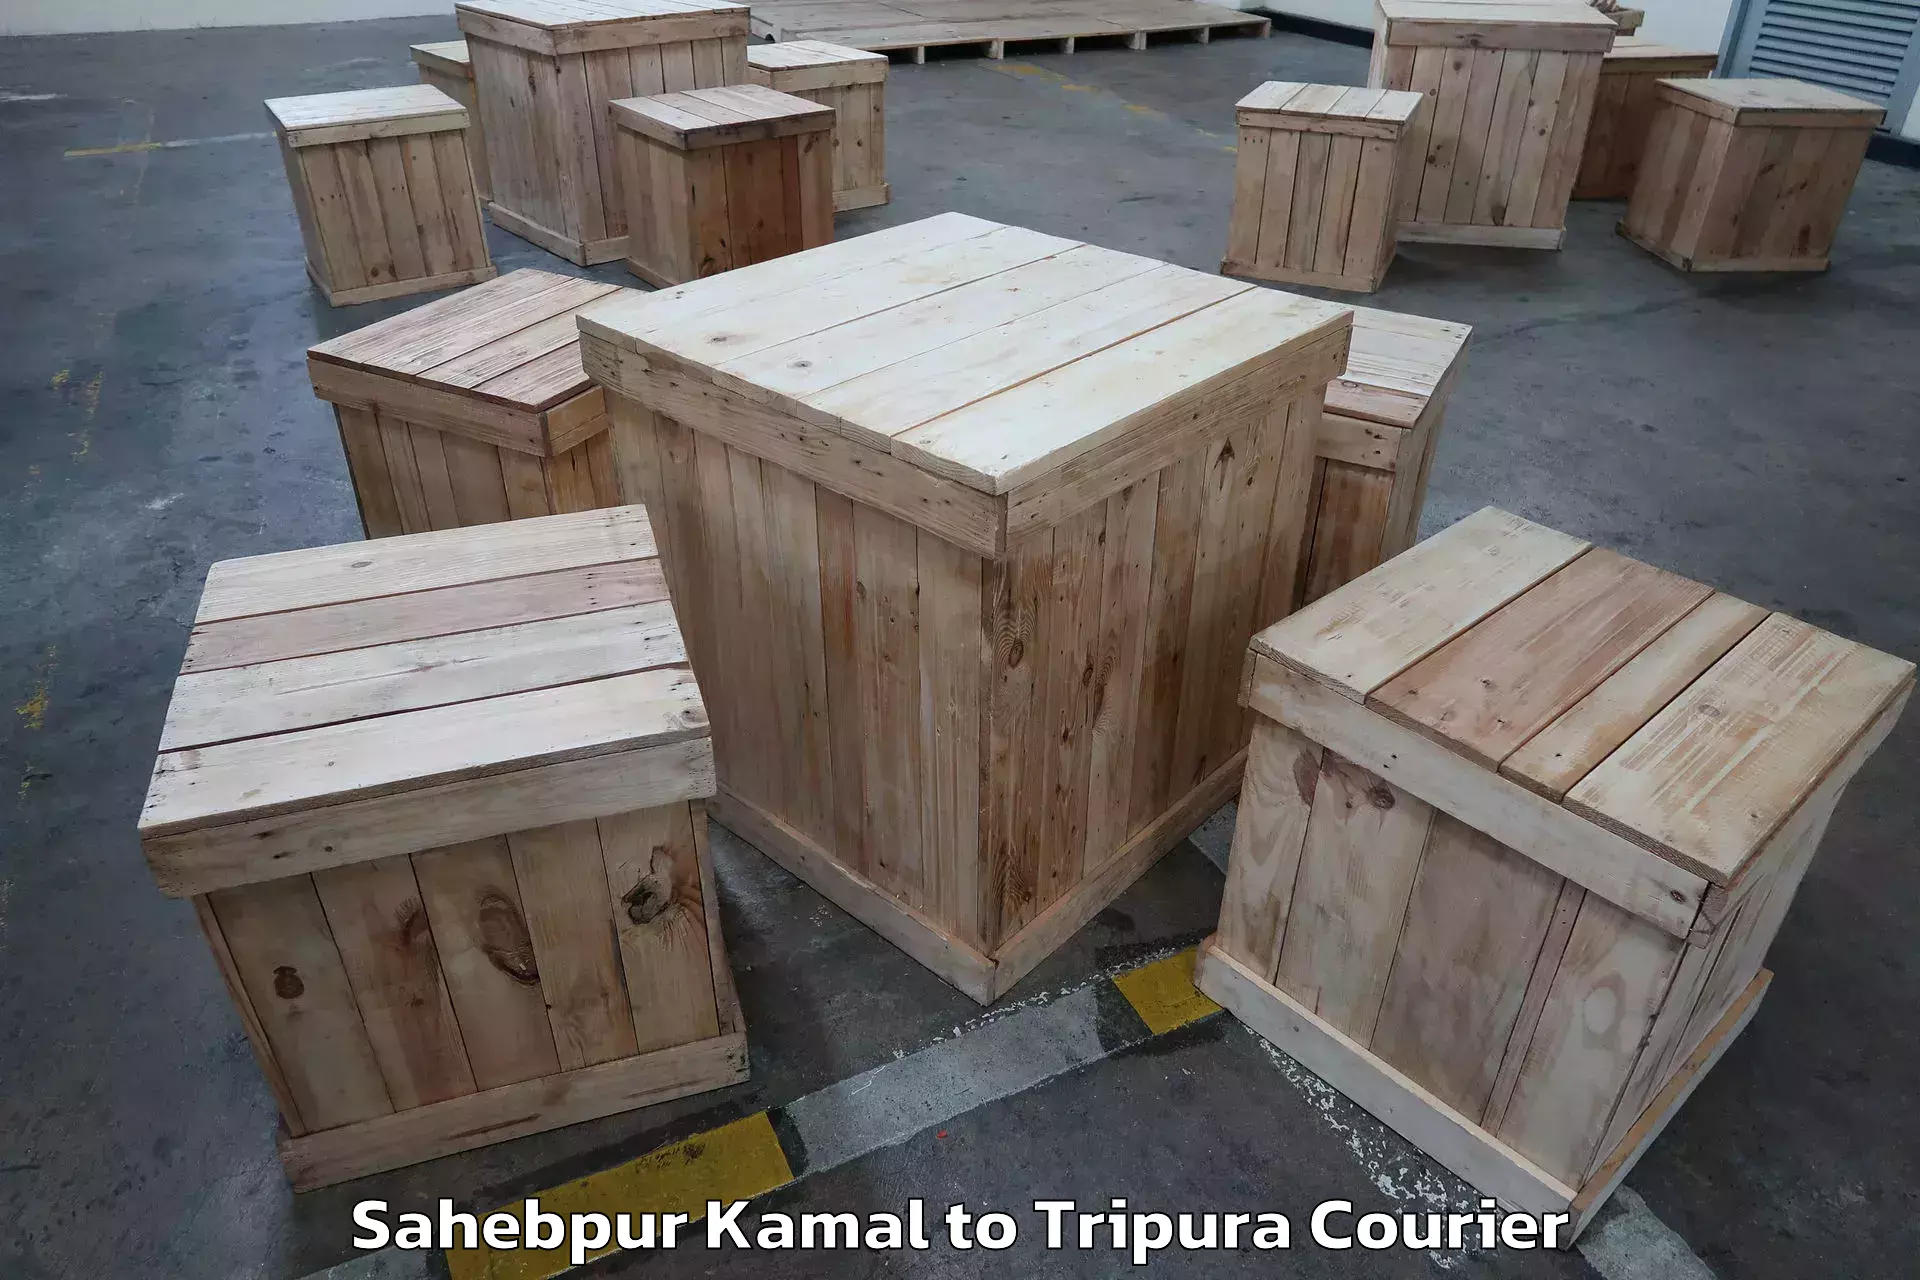 Moving and packing experts Sahebpur Kamal to Udaipur Tripura